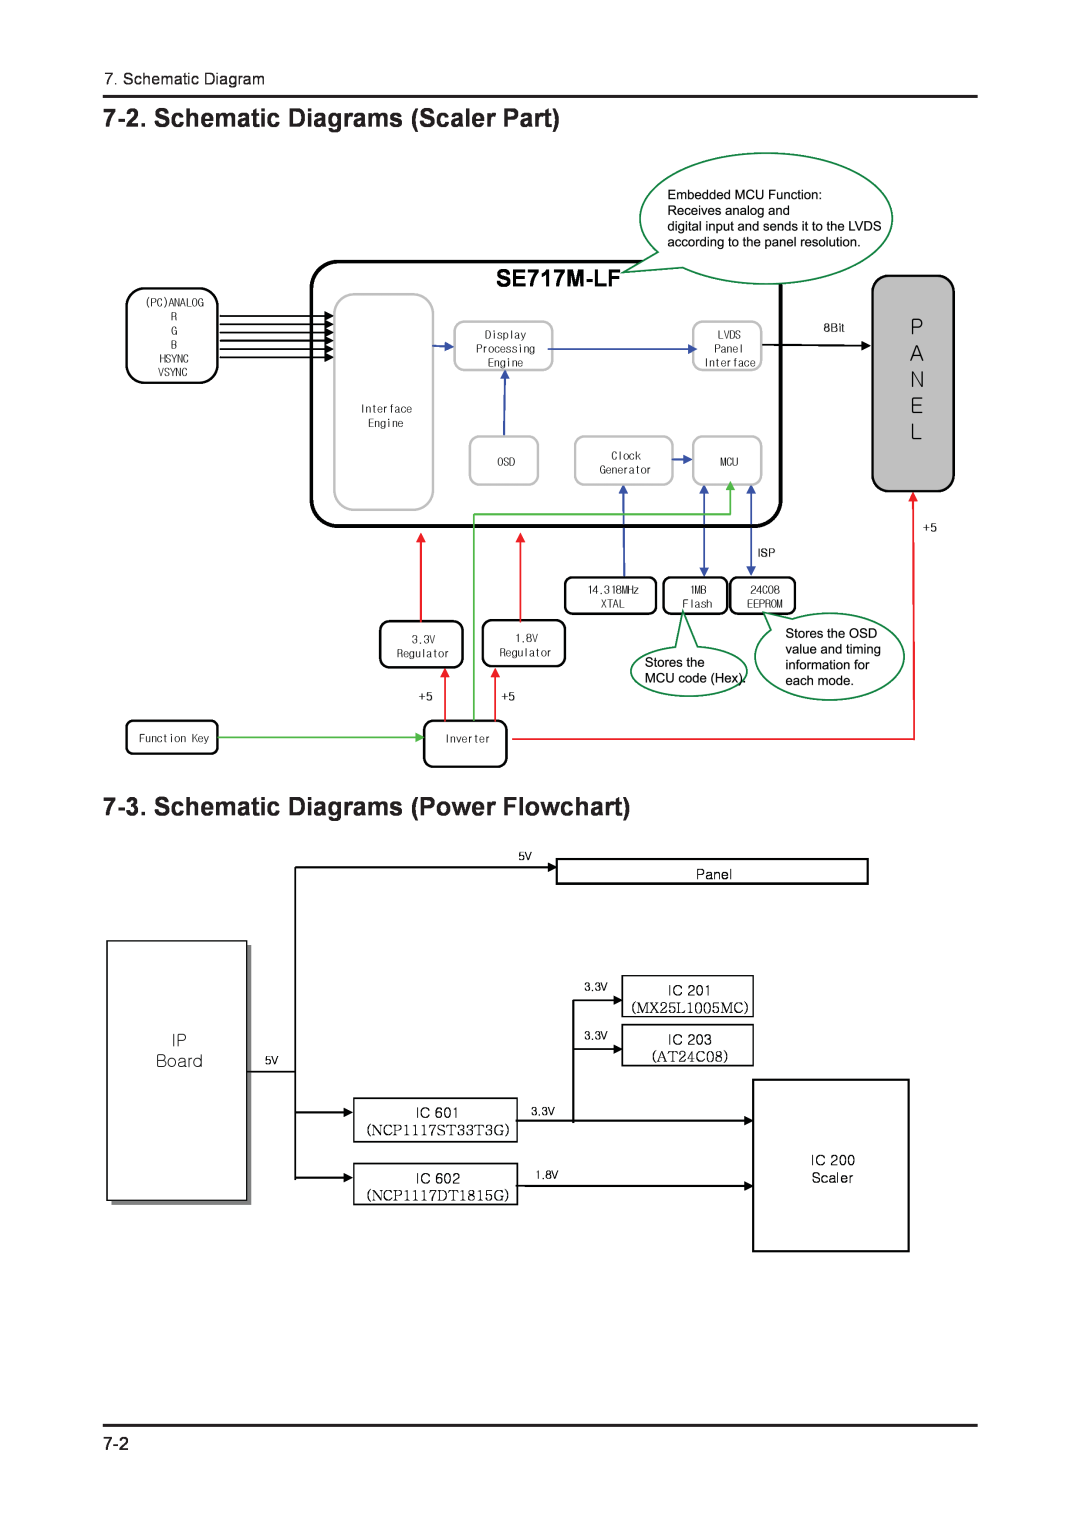 Samsung 943NWX service manual Schematic Diagrams Scaler Part, Schematic Diagrams Power Flowchart, SE717M-LF, IP Board 